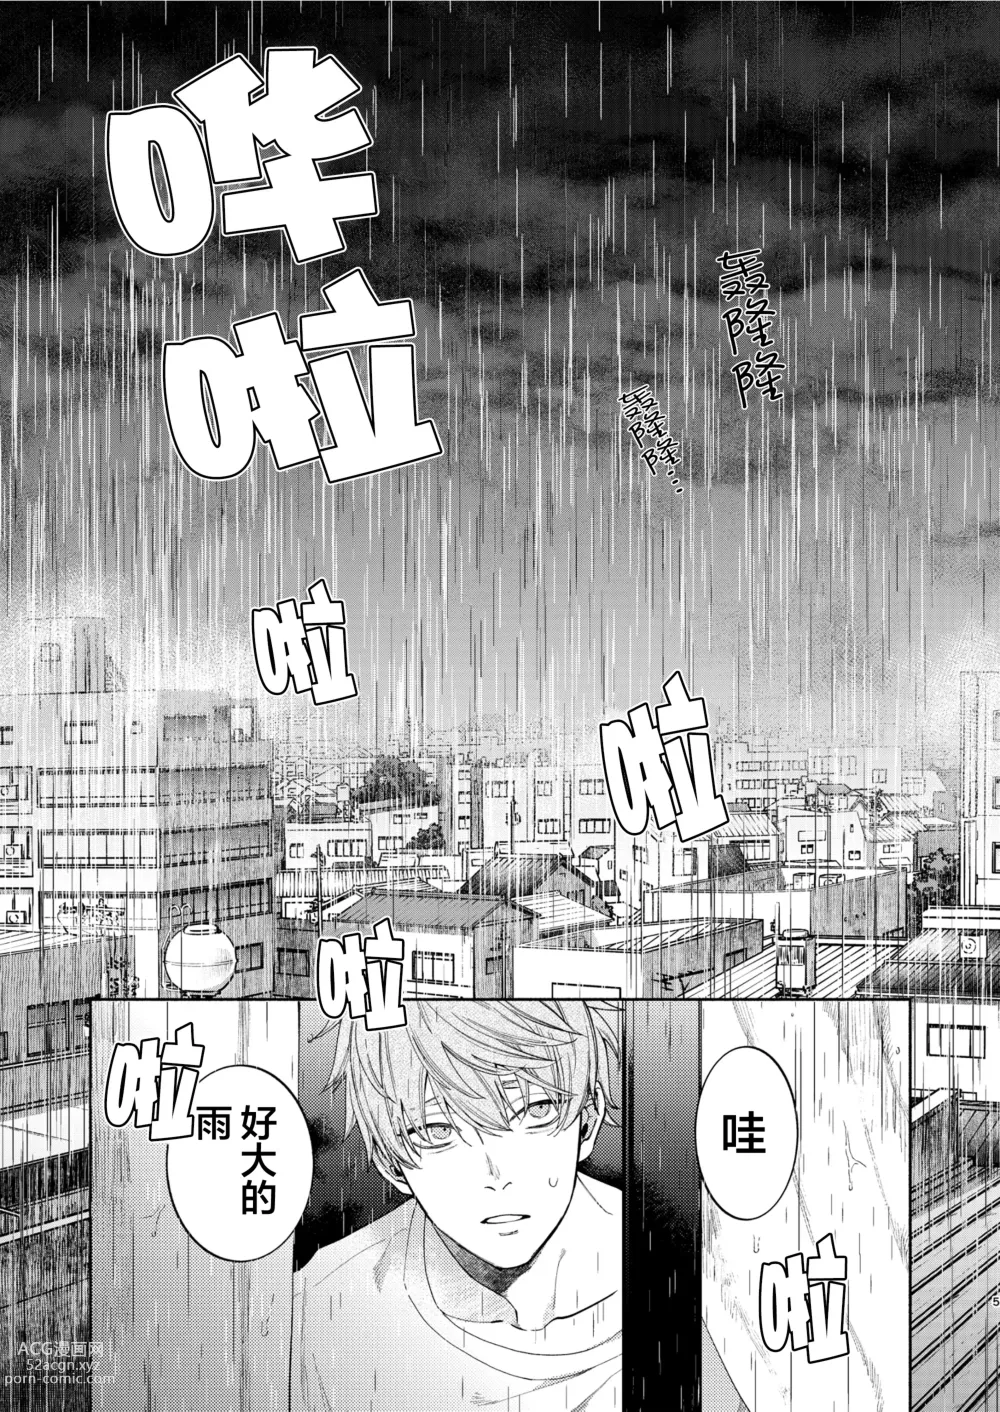 Page 5 of doujinshi 好雨配闲时、该当肆意寻欢慰己